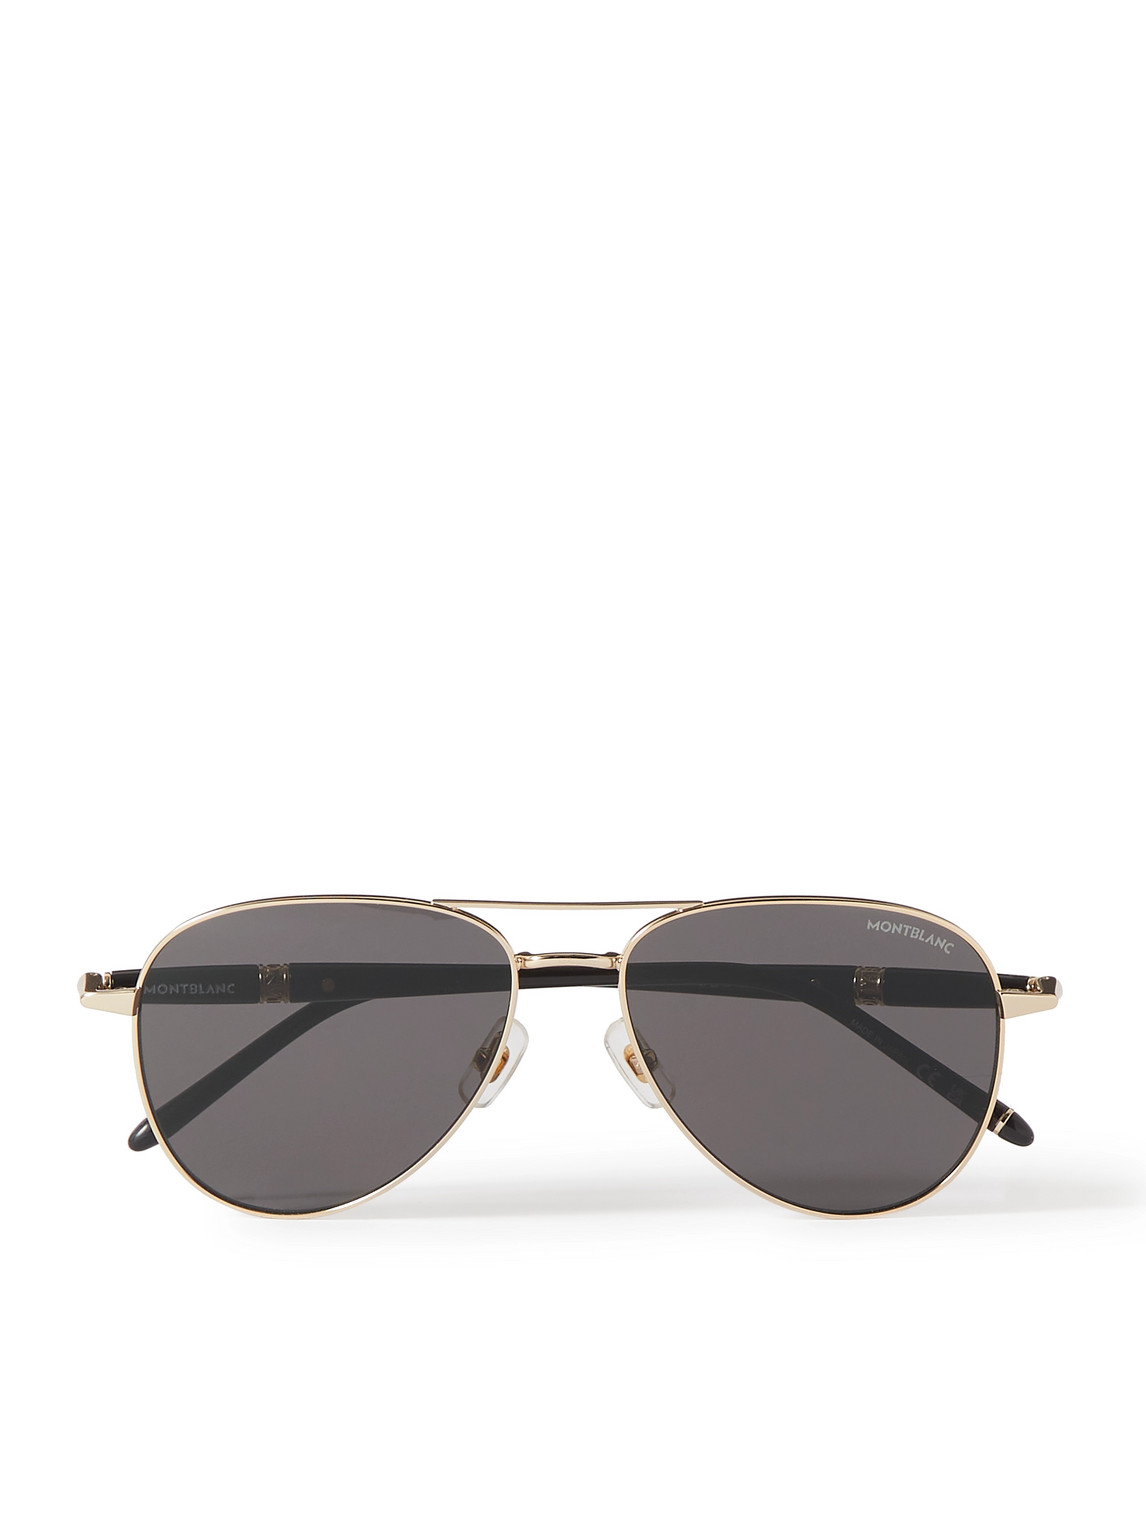 Montblanc Meisterstück Aviator-style Gold-tone Acetate Sunglasses In Gray